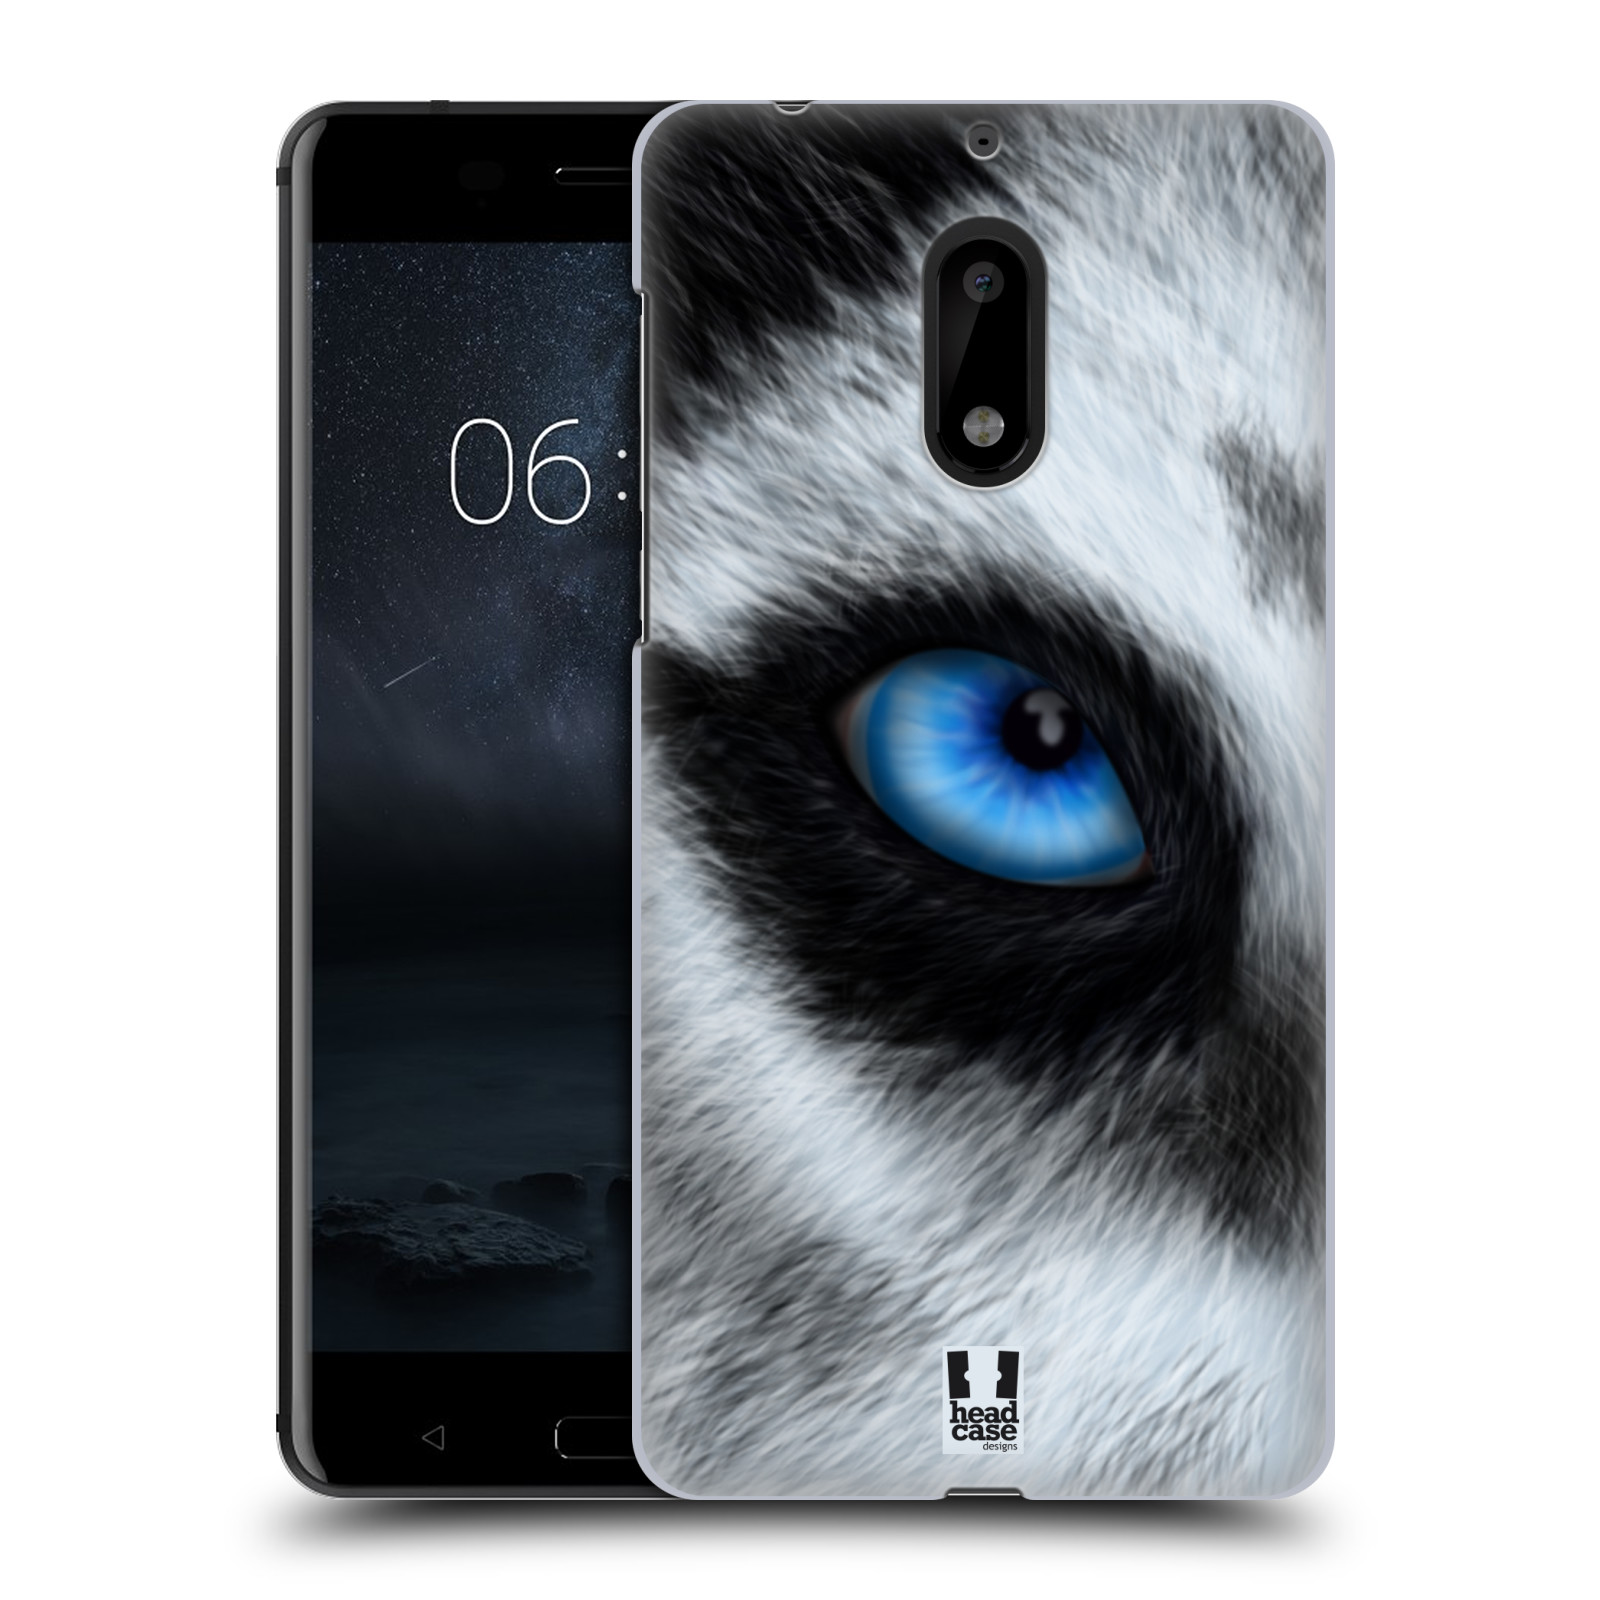 HEAD CASE plastový obal na mobil Nokia 6 vzor pohled zvířete oko pes husky